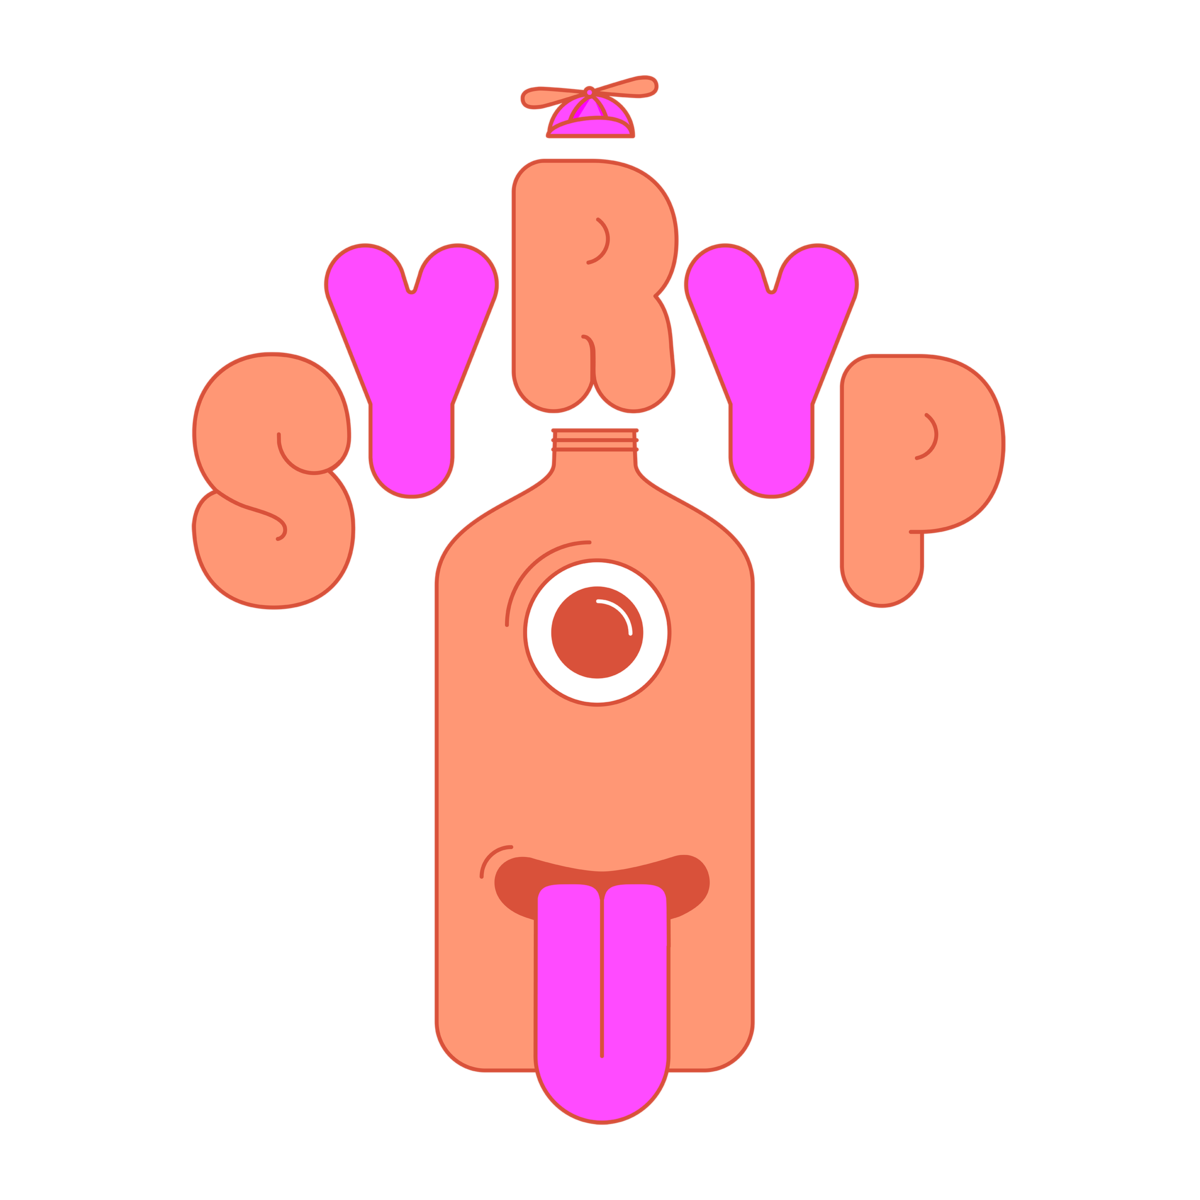 syryp-logo-01.png